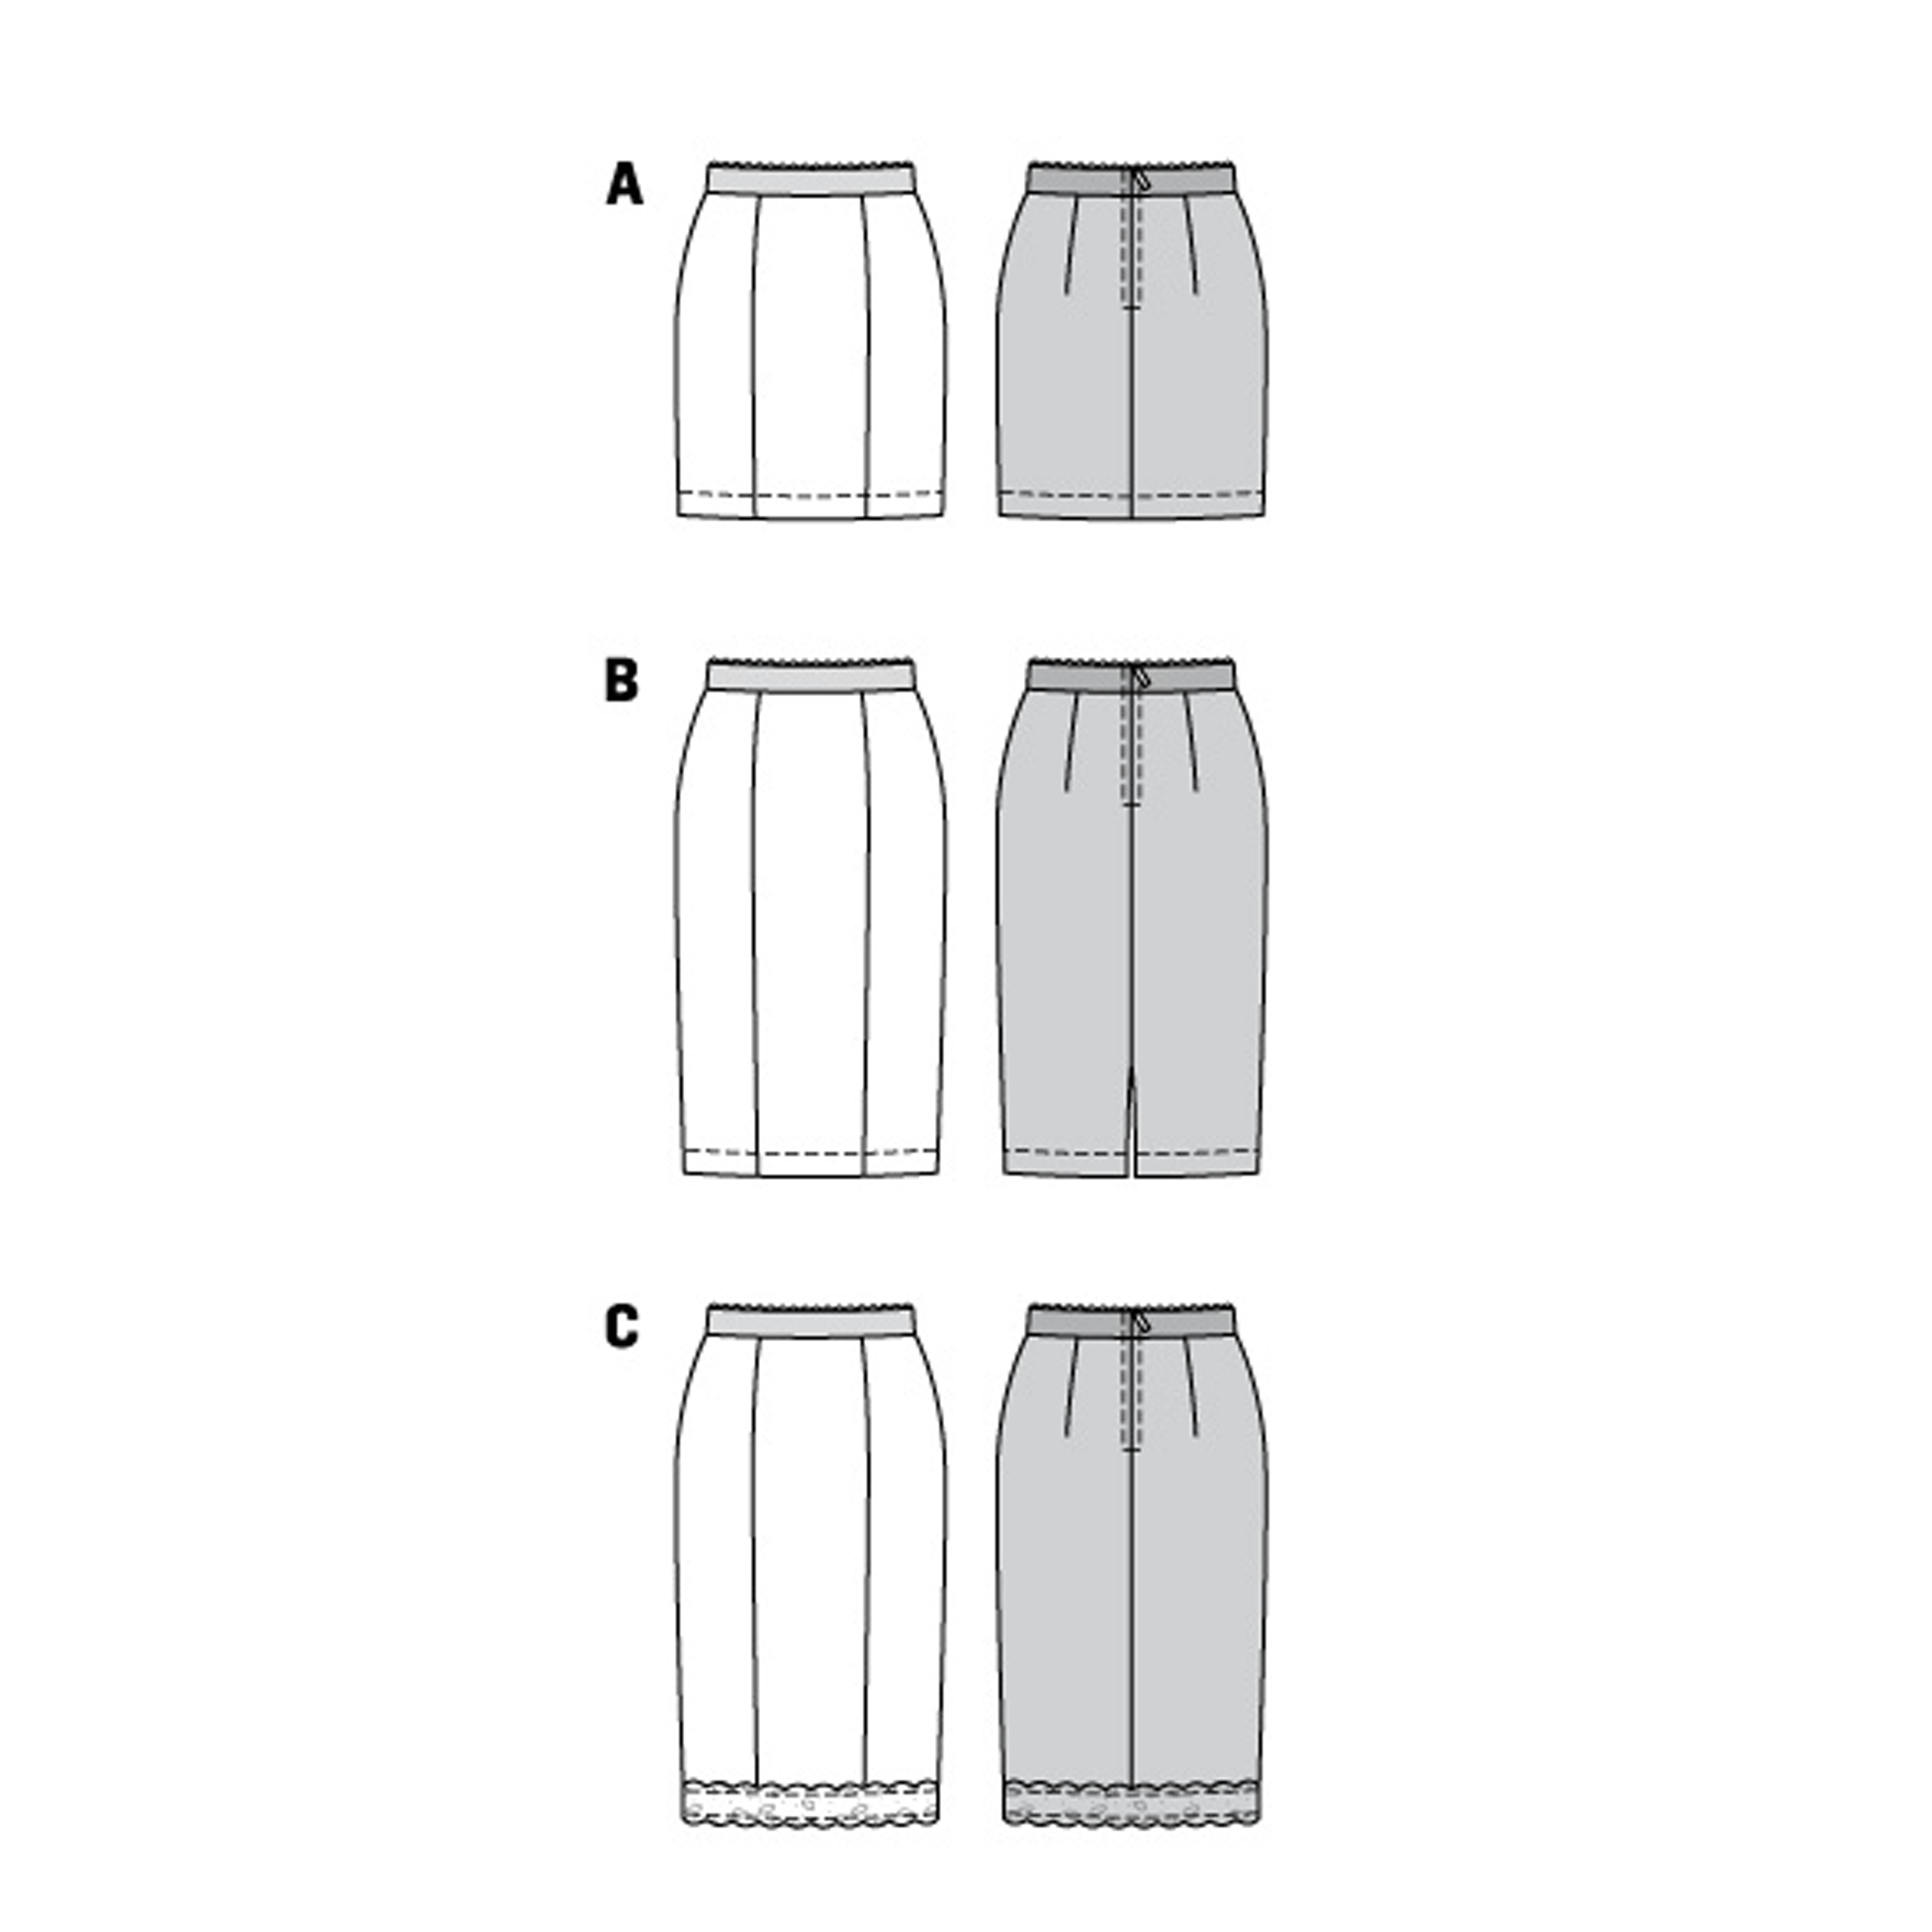 Burda Sewing Pattern 6112 Skirt from Jaycotts Sewing Supplies